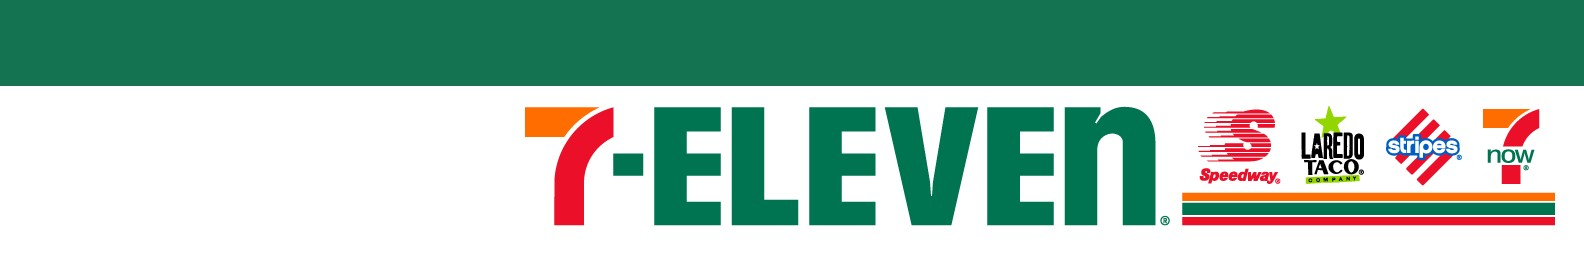 7-Eleven, Inc. background